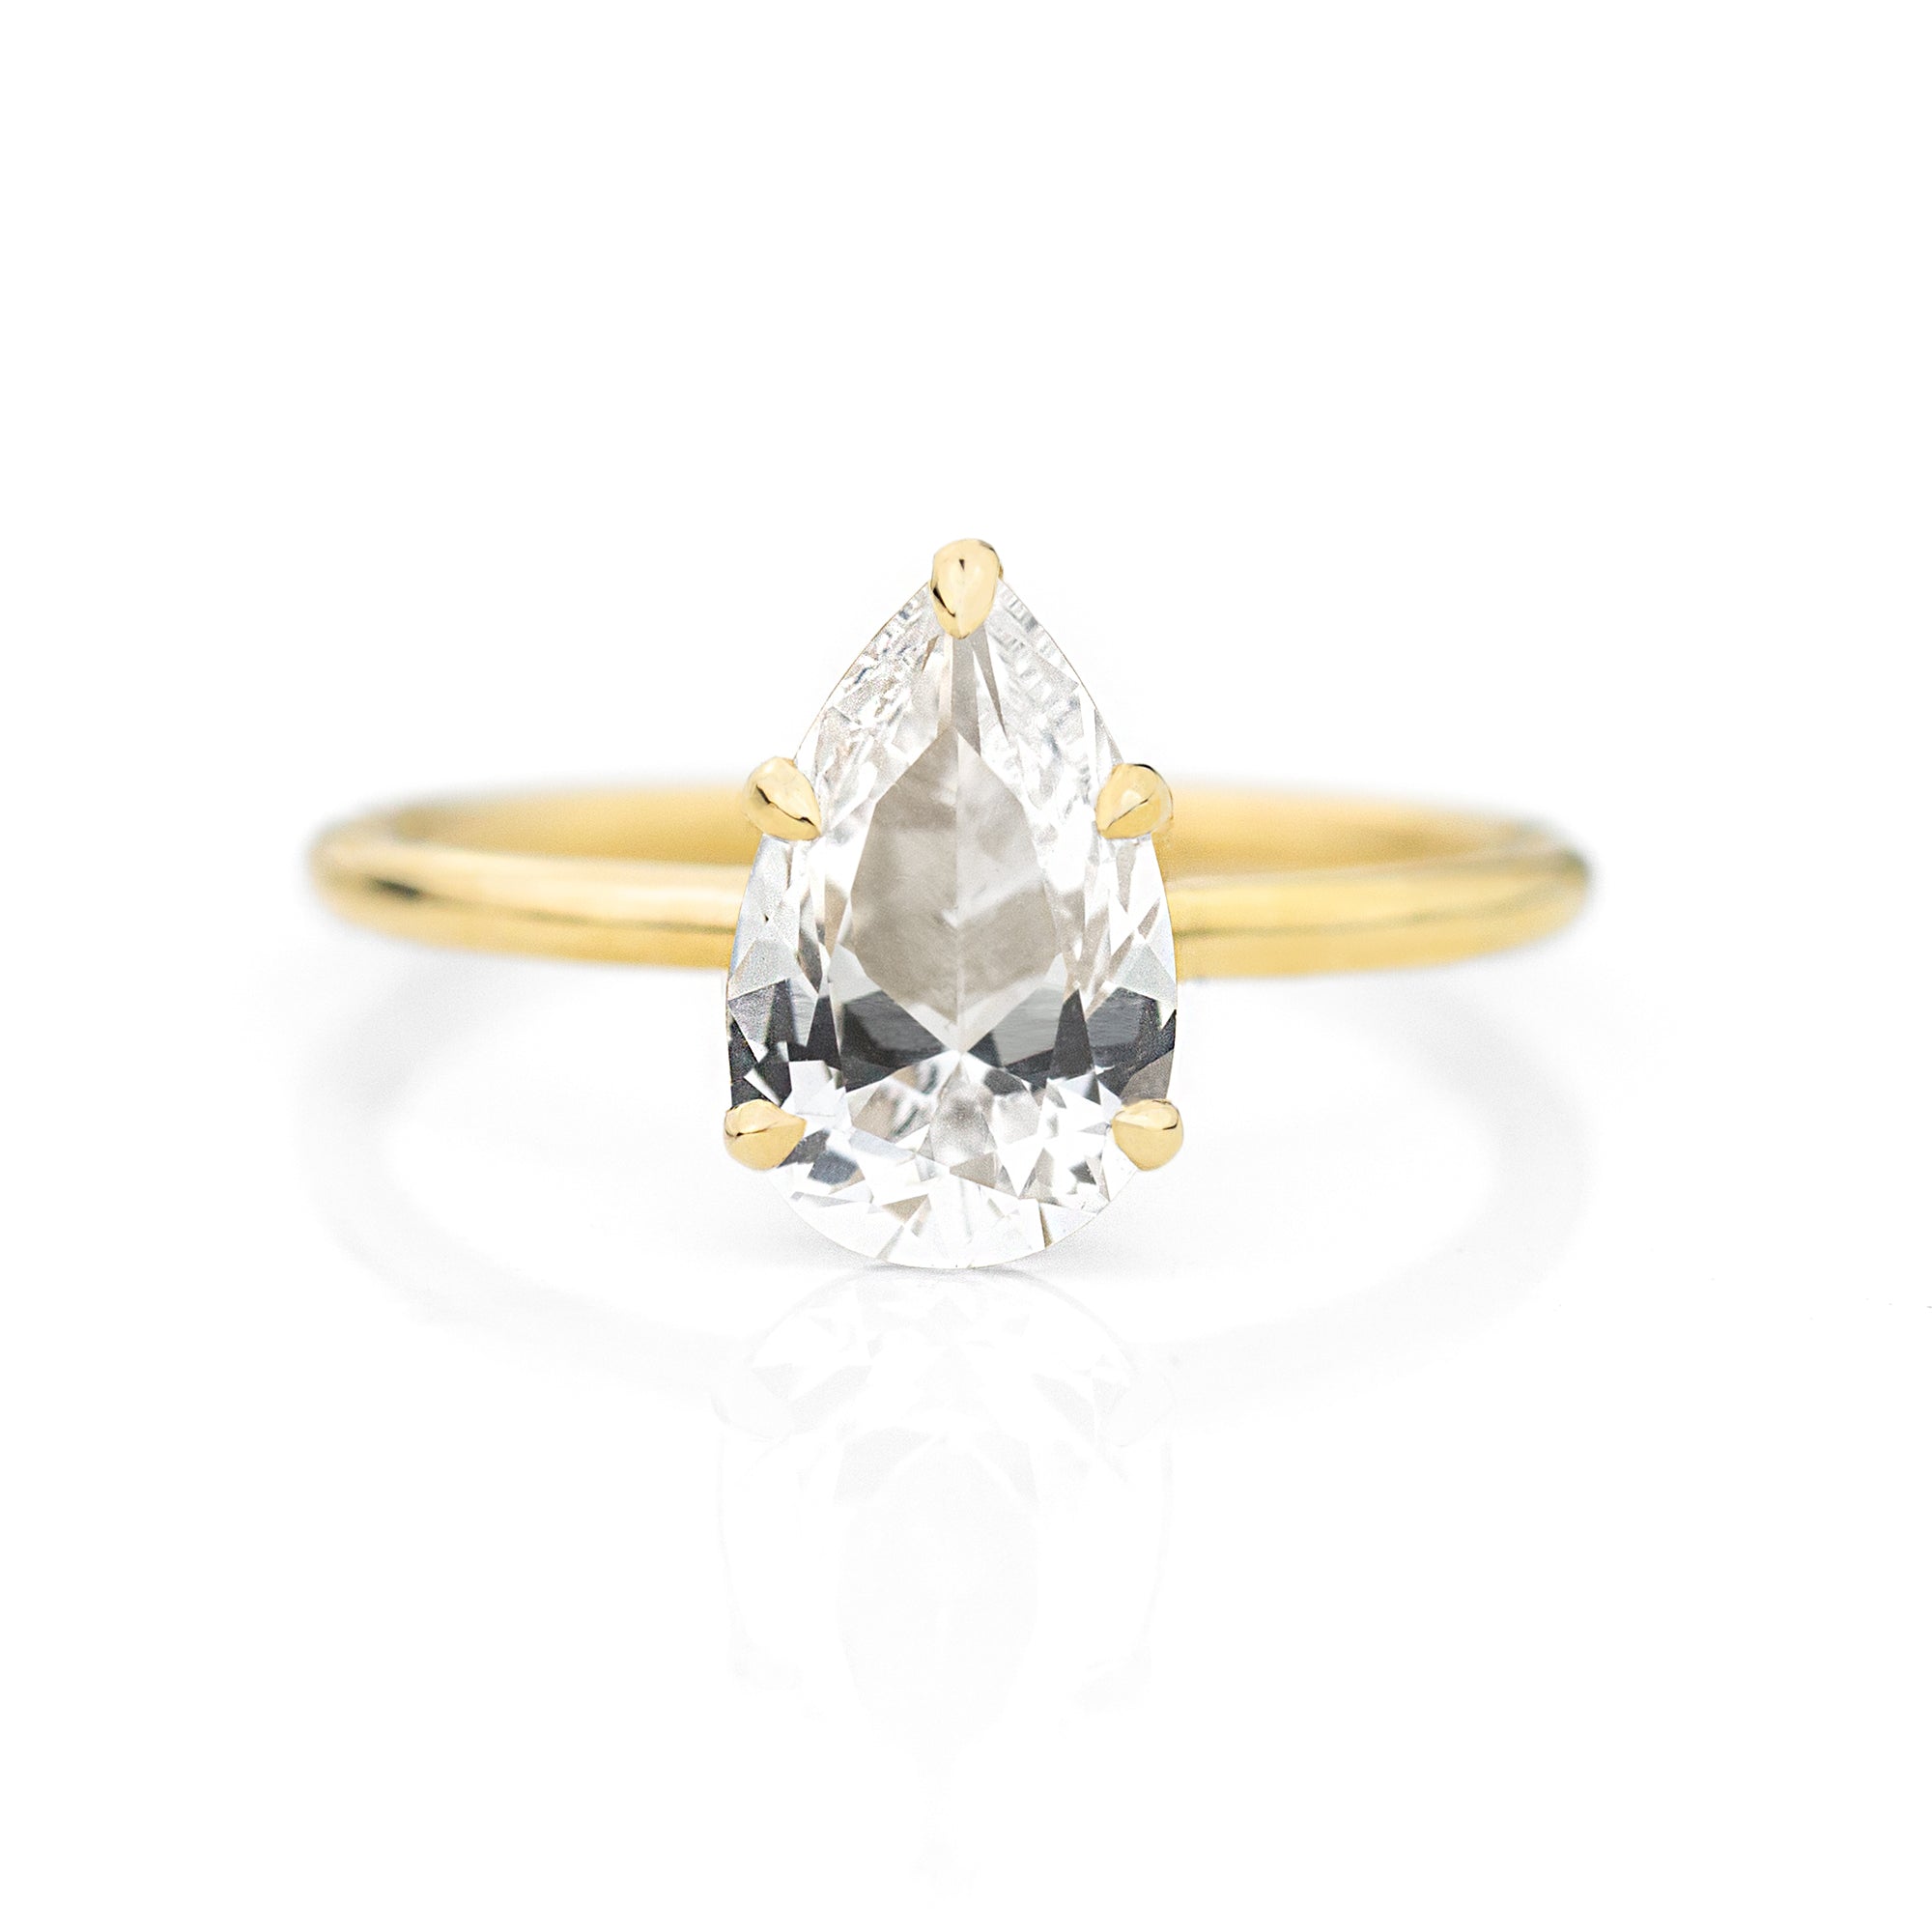 Jamie Park Jewelry - 2ct Pear Cut Lab Diamond Ring 